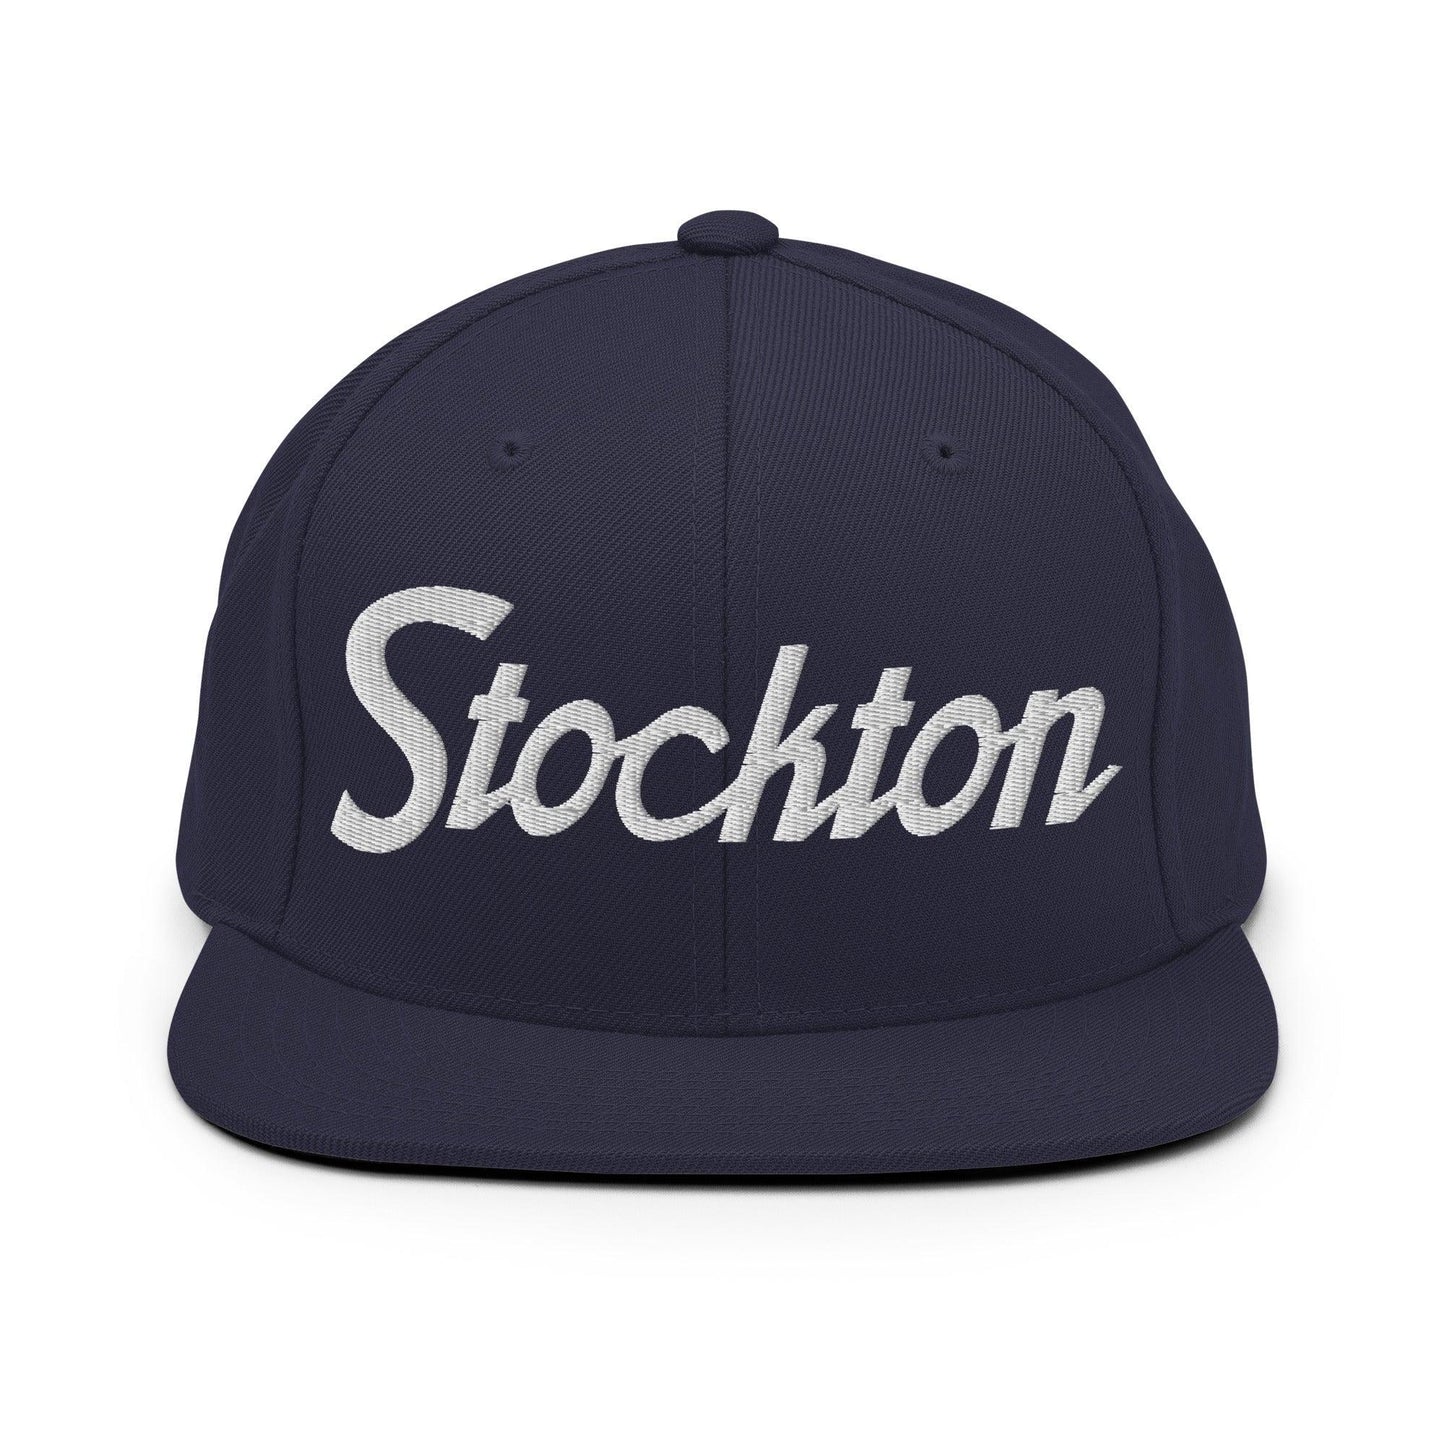 Stockton Script Snapback Hat Navy